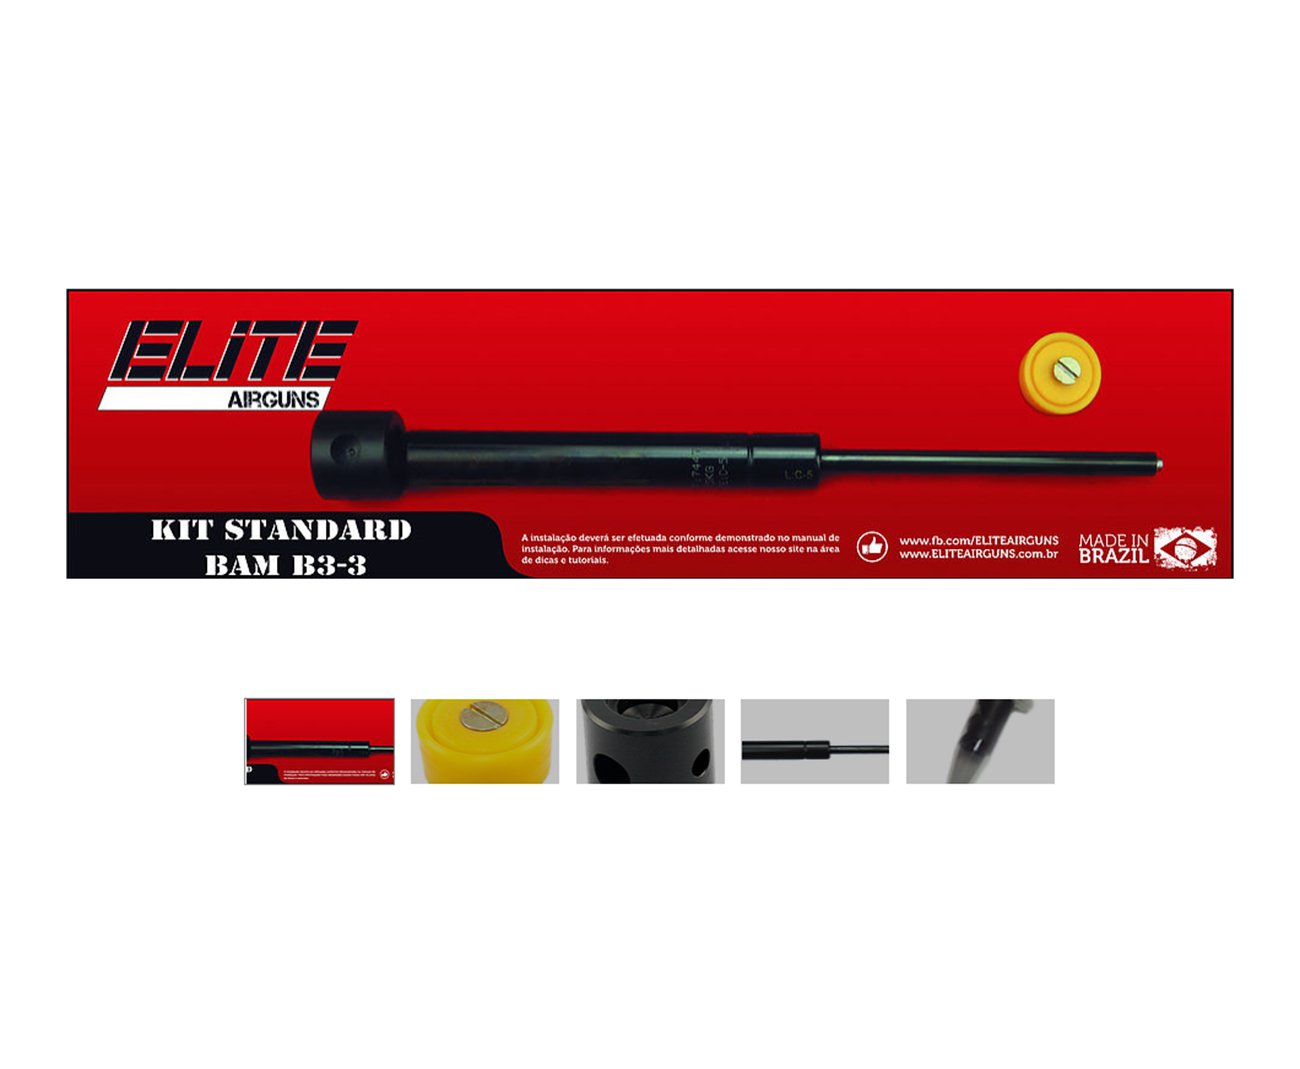 Kit Customização Standard Carabinas Bam B3-3 -35kg - Elite Airguns